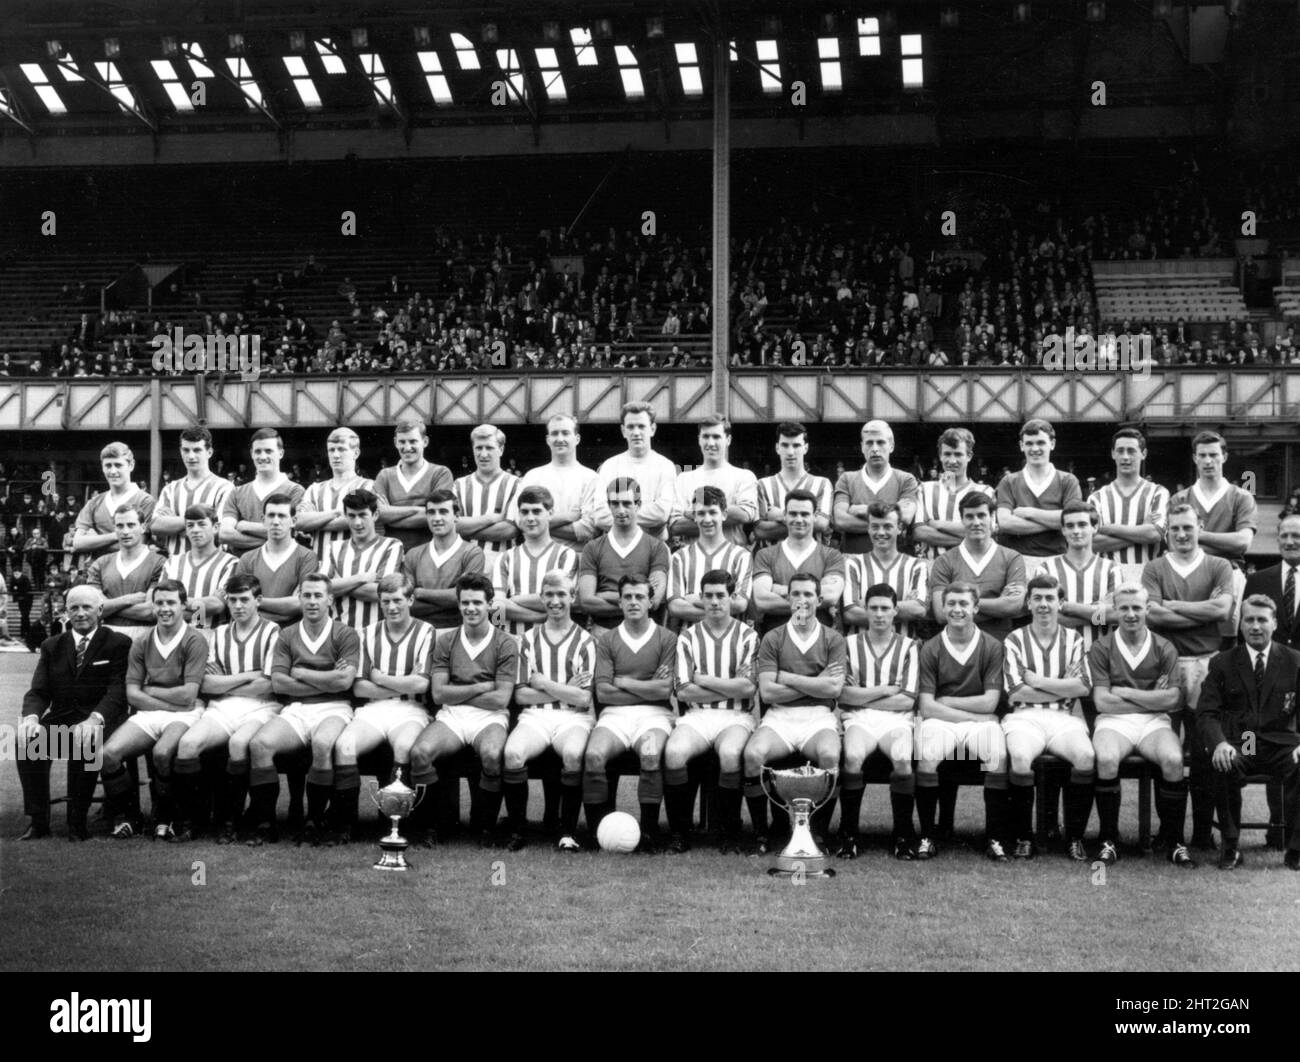 Rangers FC Team Line-up at Ibrox Stadium August 1965.  Back row (left to right) A Willoughby, J Stewart, C Watson, G Patterson, R Watson, F McGillvray, B Ritchie, N Martin, K McFarlane, D McLardy, T Beck, W Jardine, W Mathieson, W Smith, D Traill  Centre row (left to right) J Johannesen, T Donnelly, J Greig, C Jackson, R McKinnon, D Ritchie, D Provan, J Simpson, R Hynd, W Sutherland, G McLean, W McCartney, W Woods, Joe Craven  Front row (left to right) manager Scott Symon, W Henderson, N Paul, J Millar, A Reid, J Forrest, D Setterington, E Cladow, S Semple, R Brand, J Jardine, W Johnston, J Vi Stock Photo